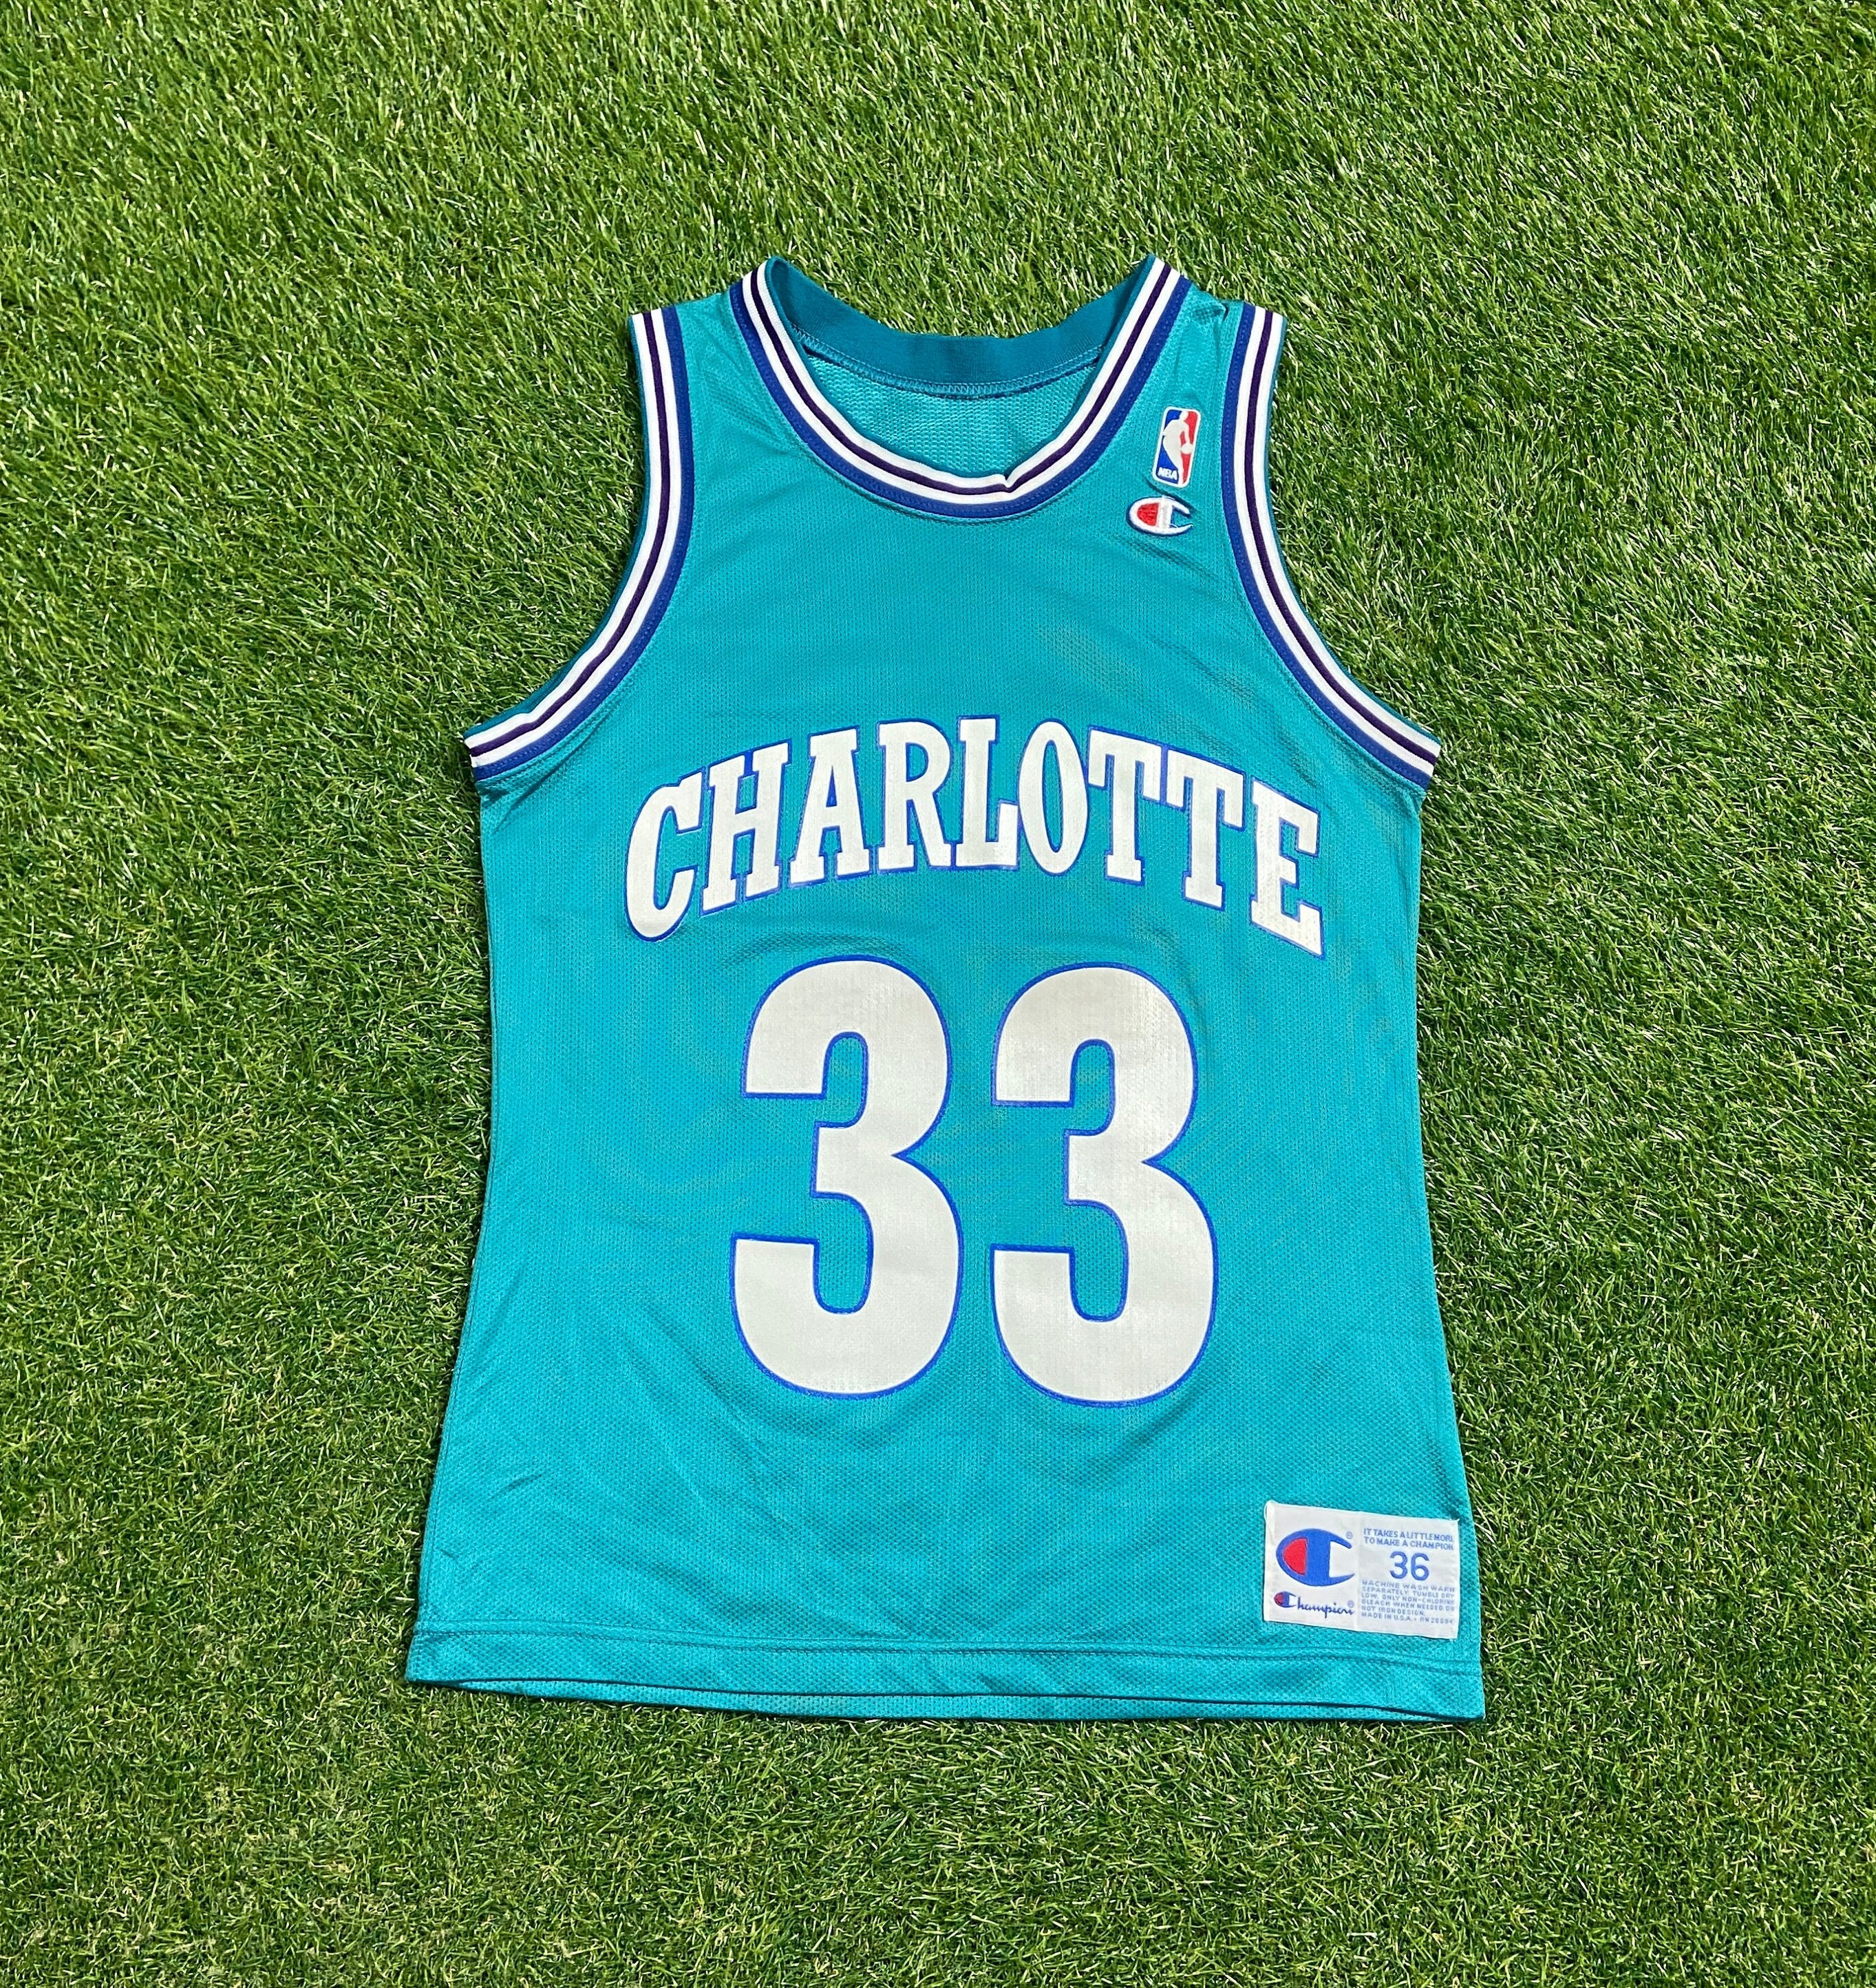 90's Larry Johnson Charlotte Hornets Champion NBA Jersey Size 48